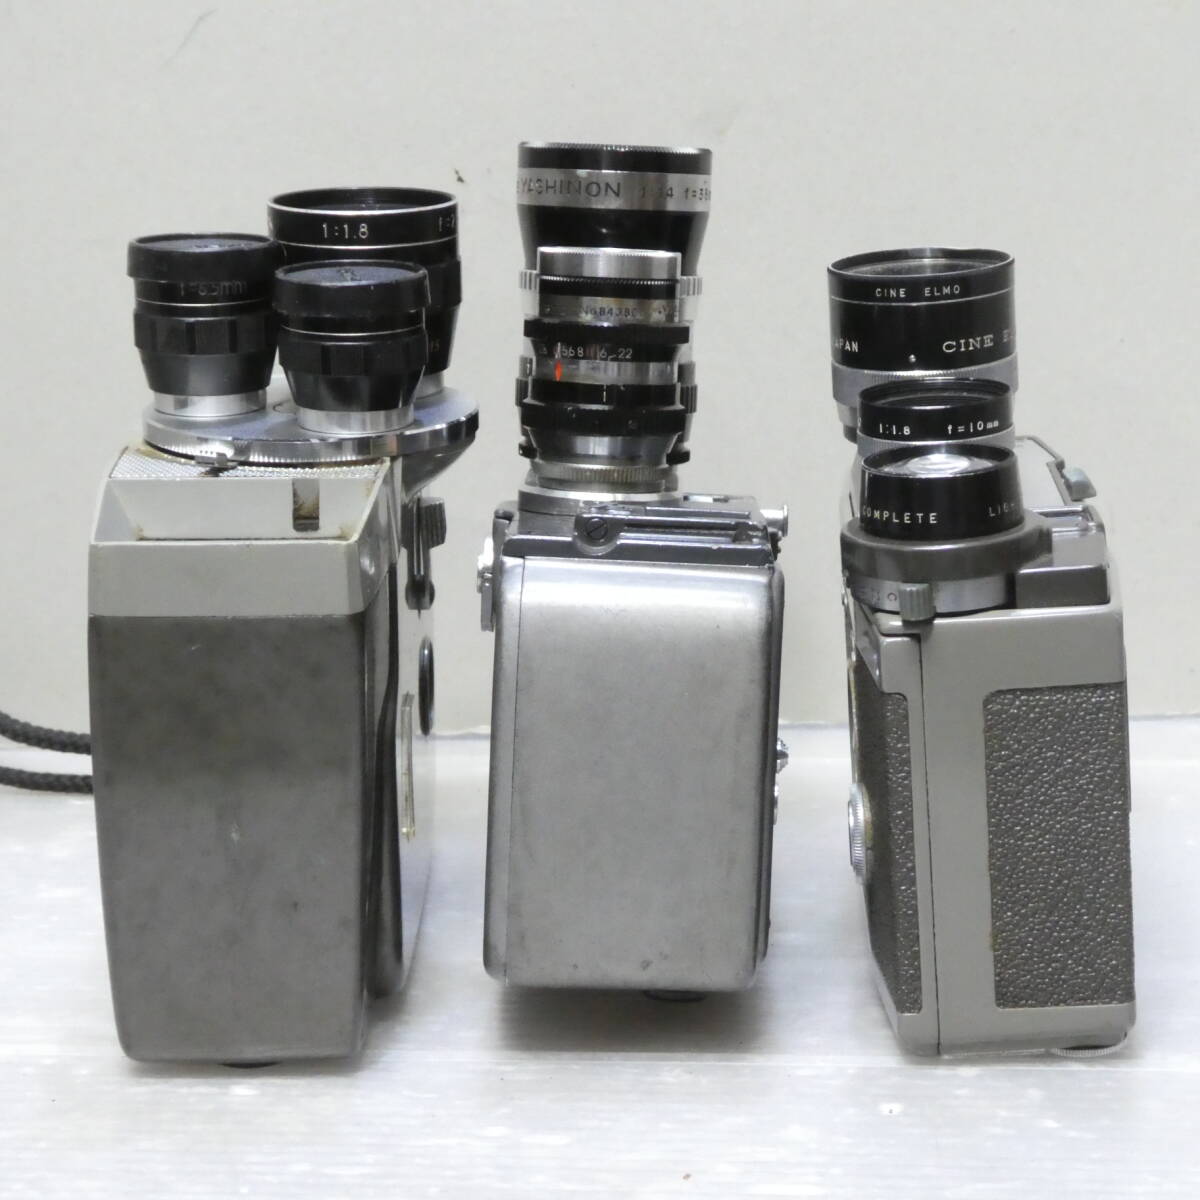  film ( compact ) camera (609) Sankyo-movimat PRONON Yashica-8 YASHINON ELMO 8-L CINE ELMO Junk set 